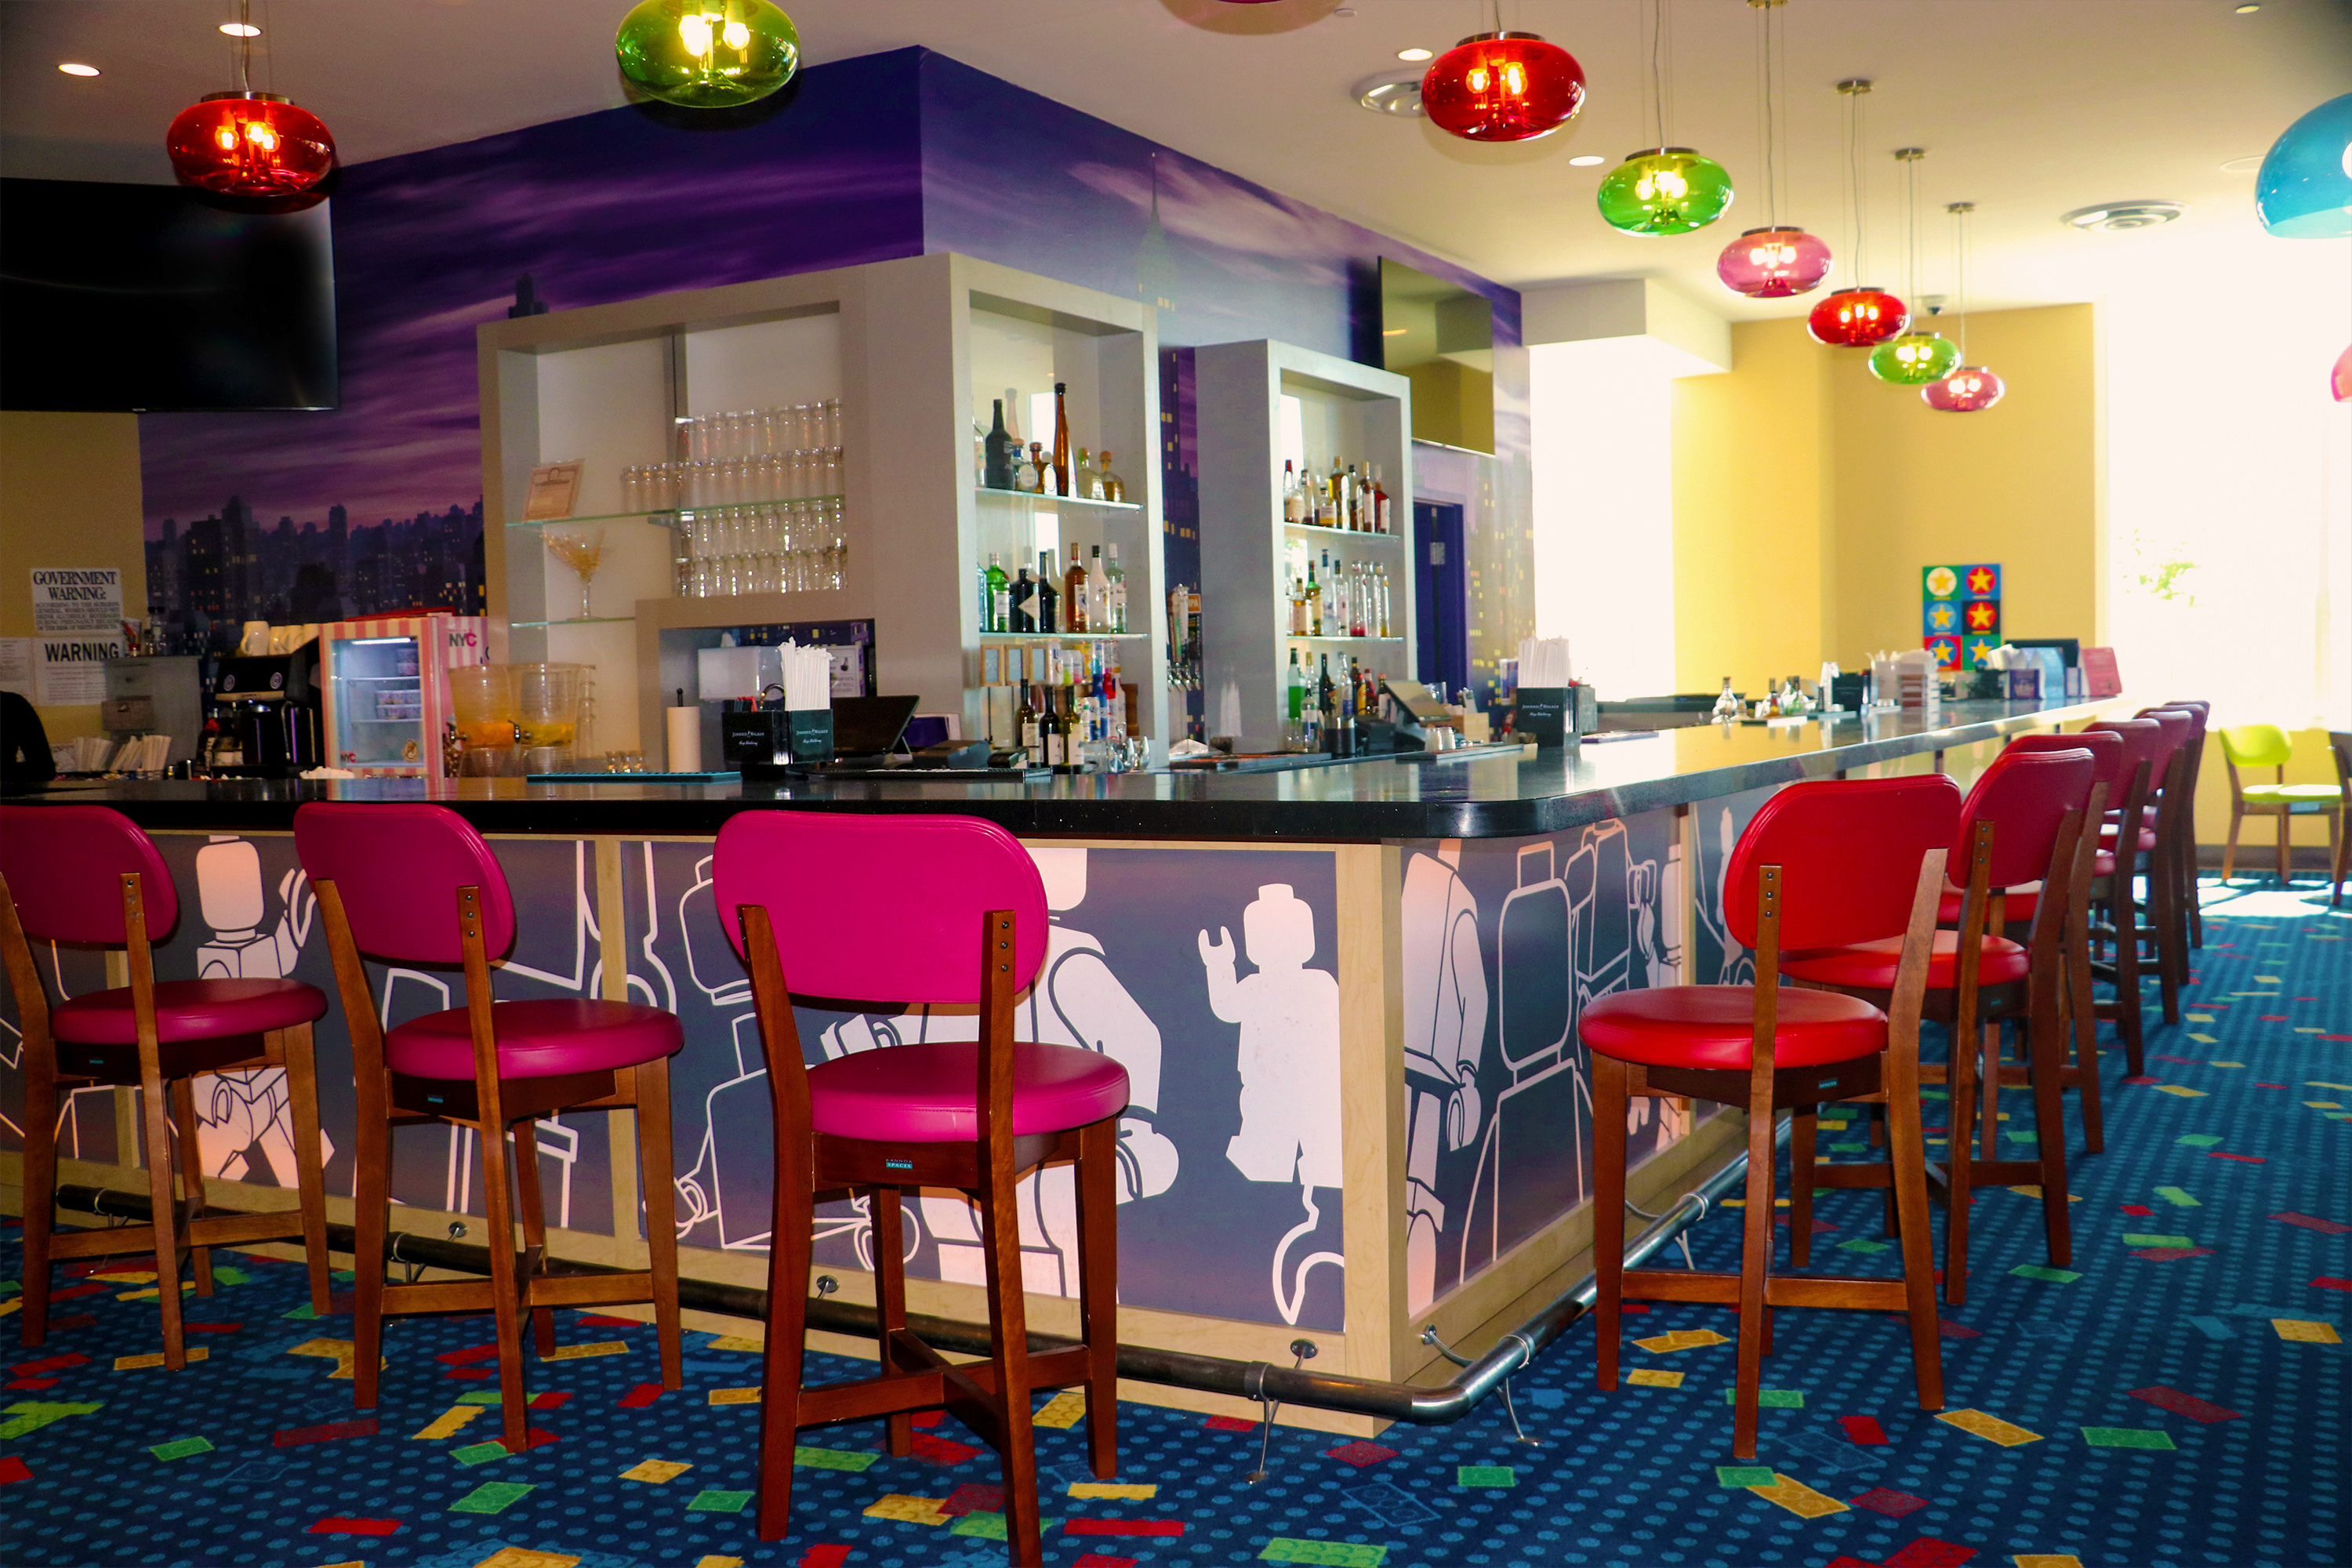 Enjoy a drink or a bite to eat at Skyline Bar inside the LEGOLAND Hotel